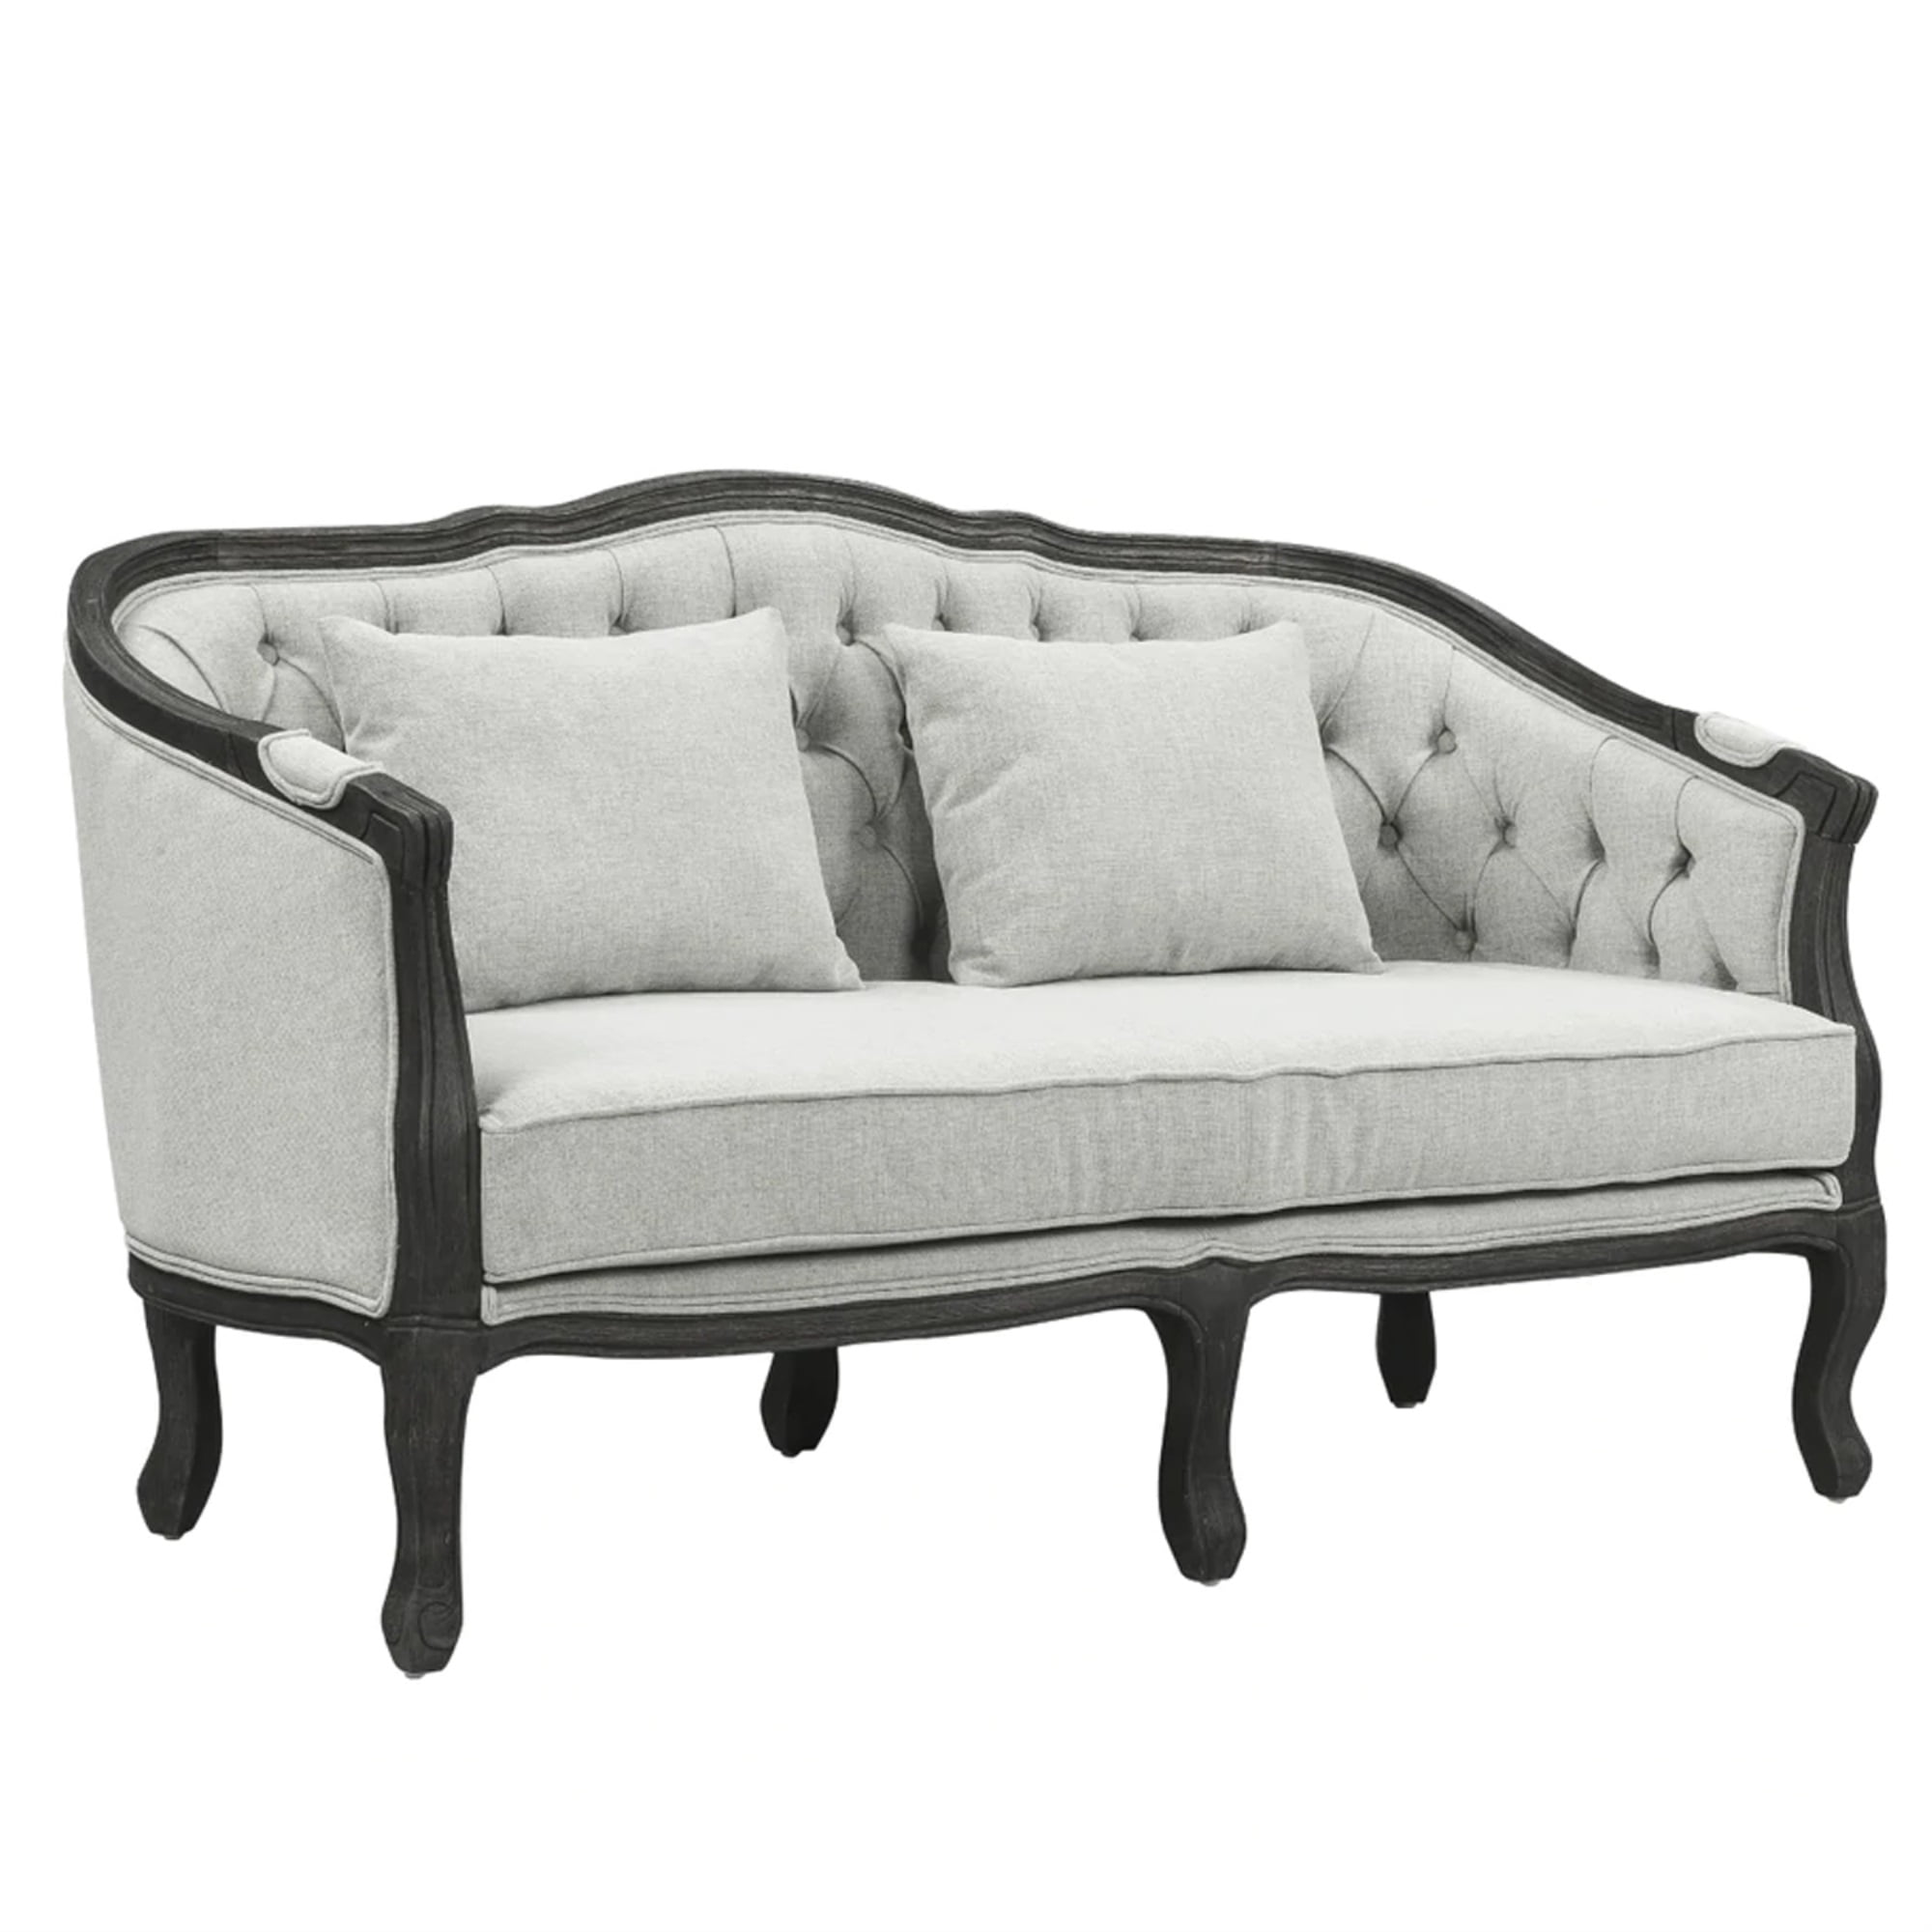 BM276240 64 in. Cam Classic Loveseat Sofa - Button Tufted Fabric, Cabriole, Gray & Brown -  Benjara